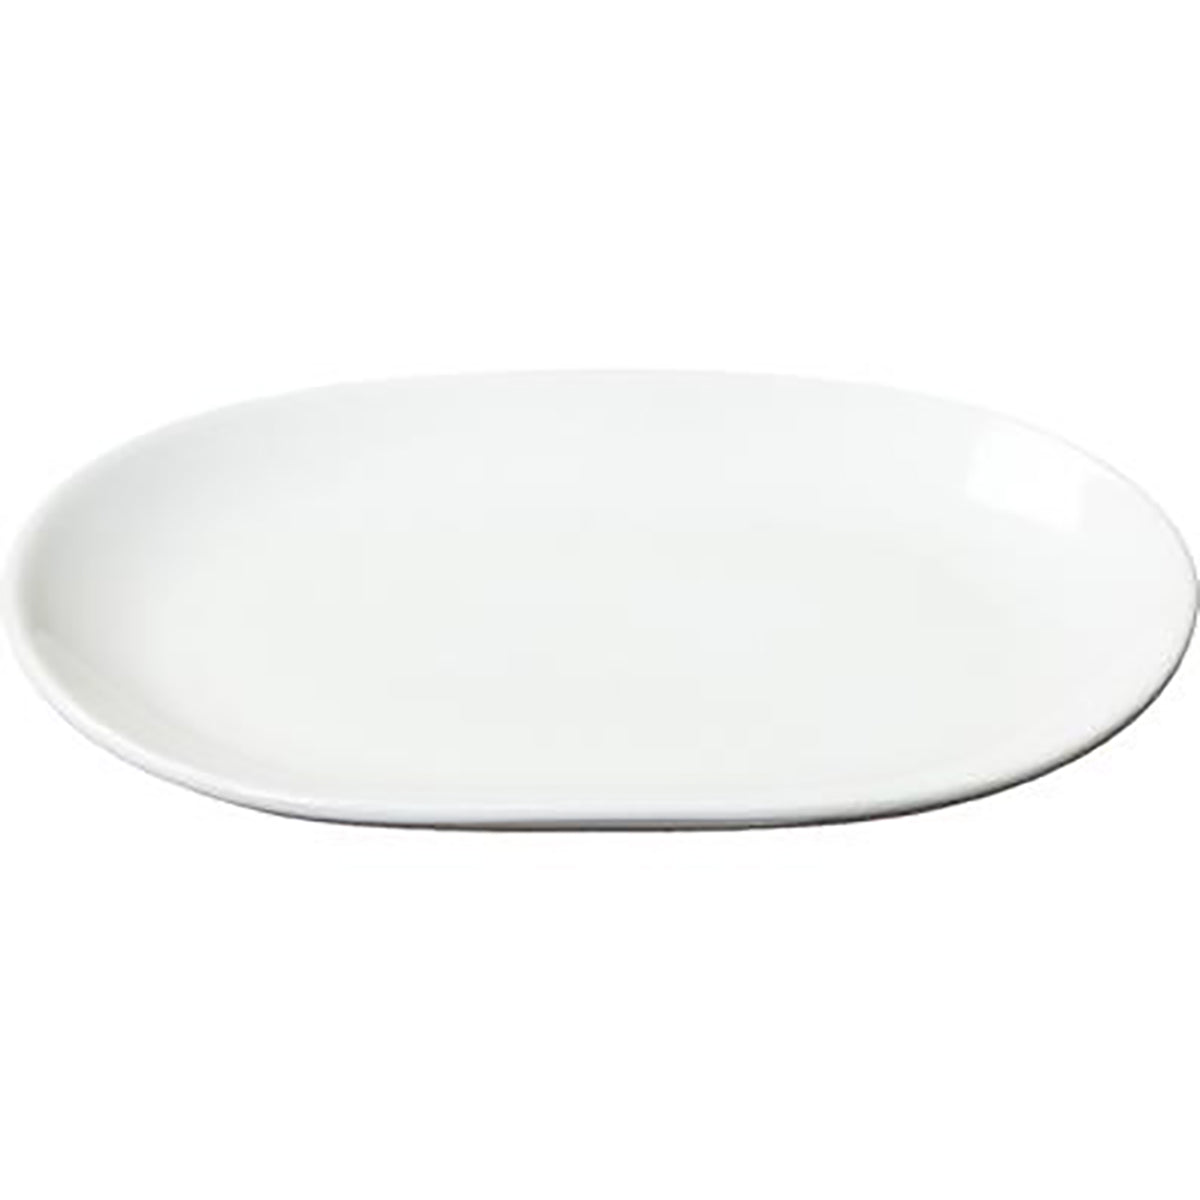 97525 Patra Porcelain Profile Oval Platter Tomkin Australia Hospitality Supplies